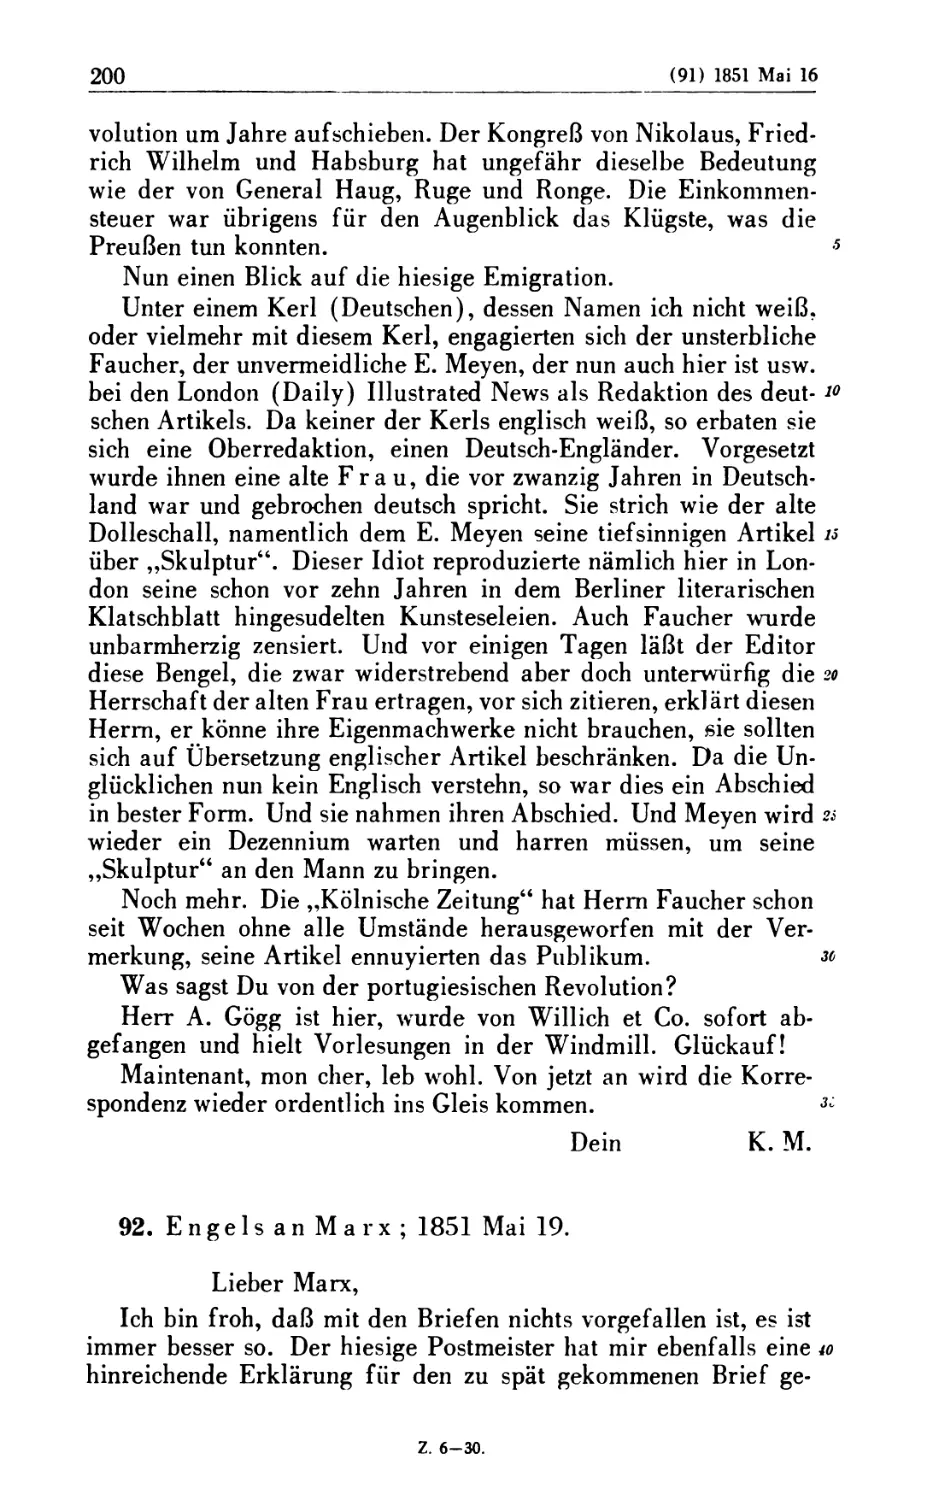 92. Engels an Marx; 1851 Mai 19